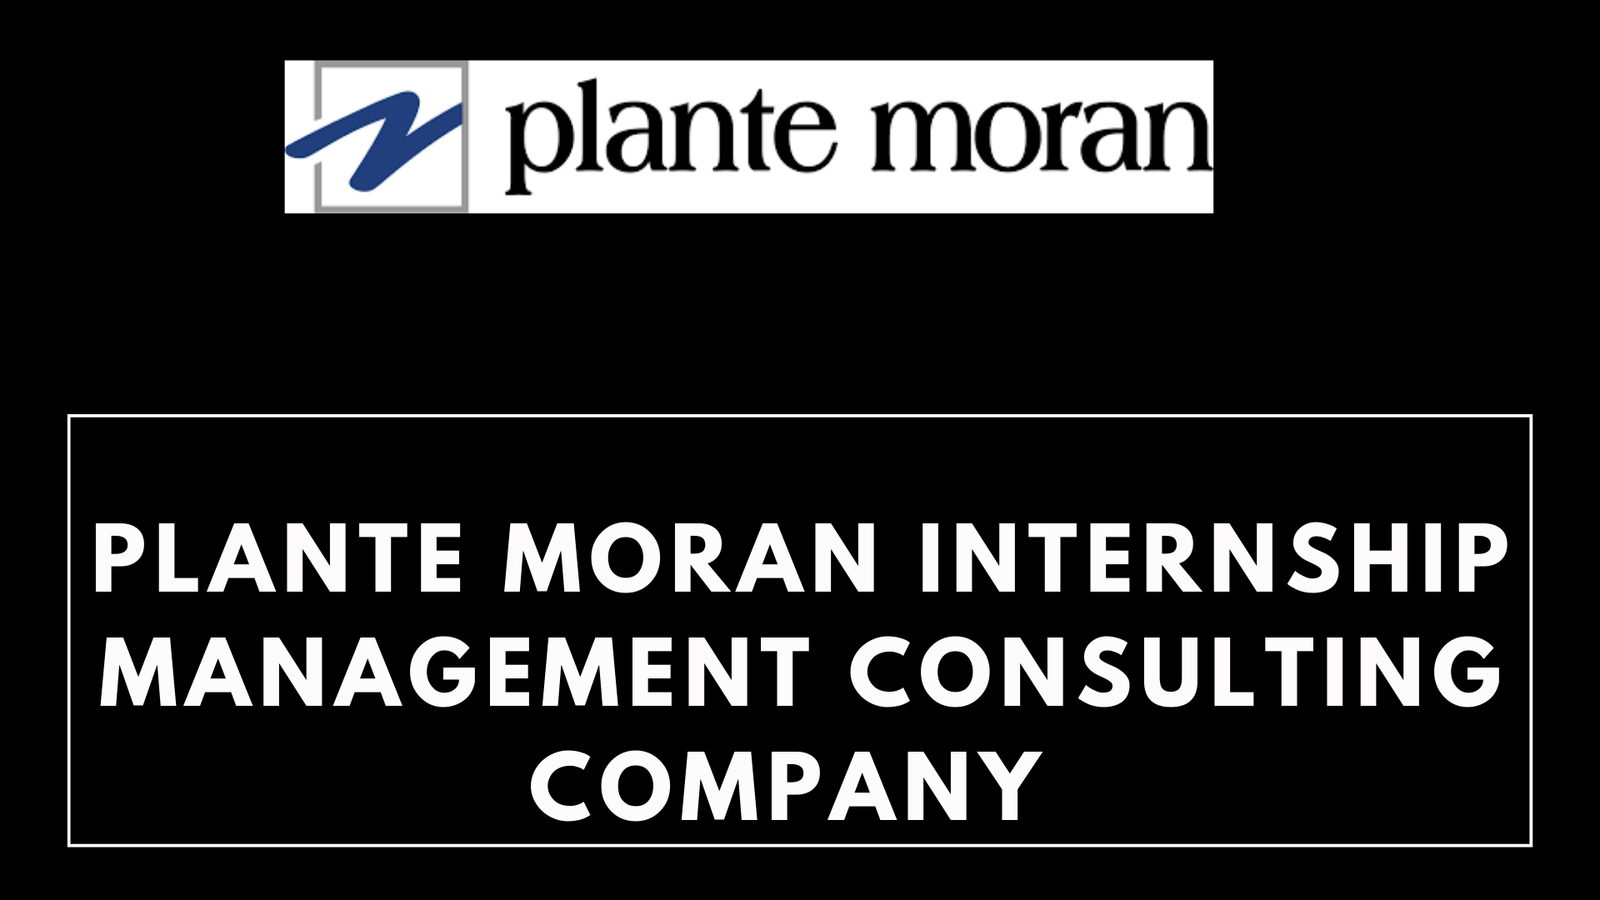 Plante Moran Internships